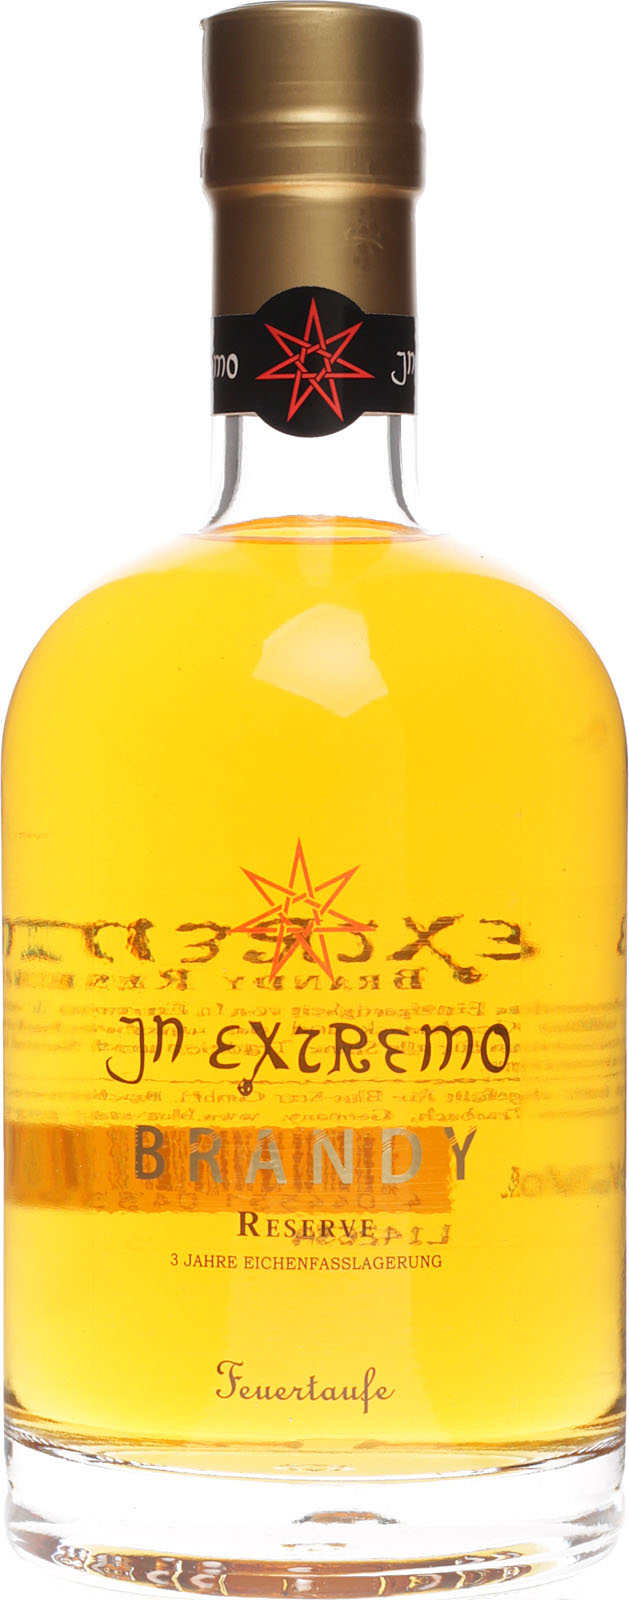 In Extremo Brandy 0,5 Liter im Vol. % Shop 40